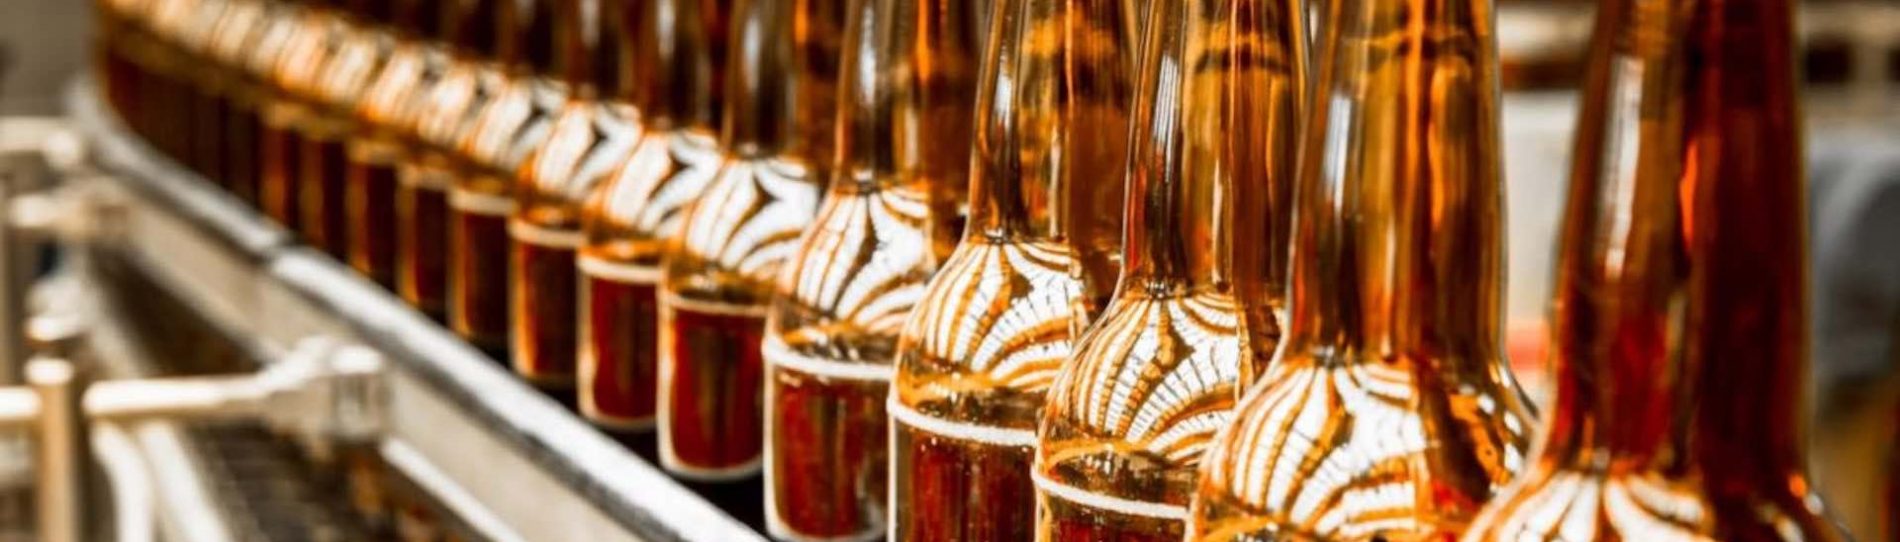 bottles of craft beer